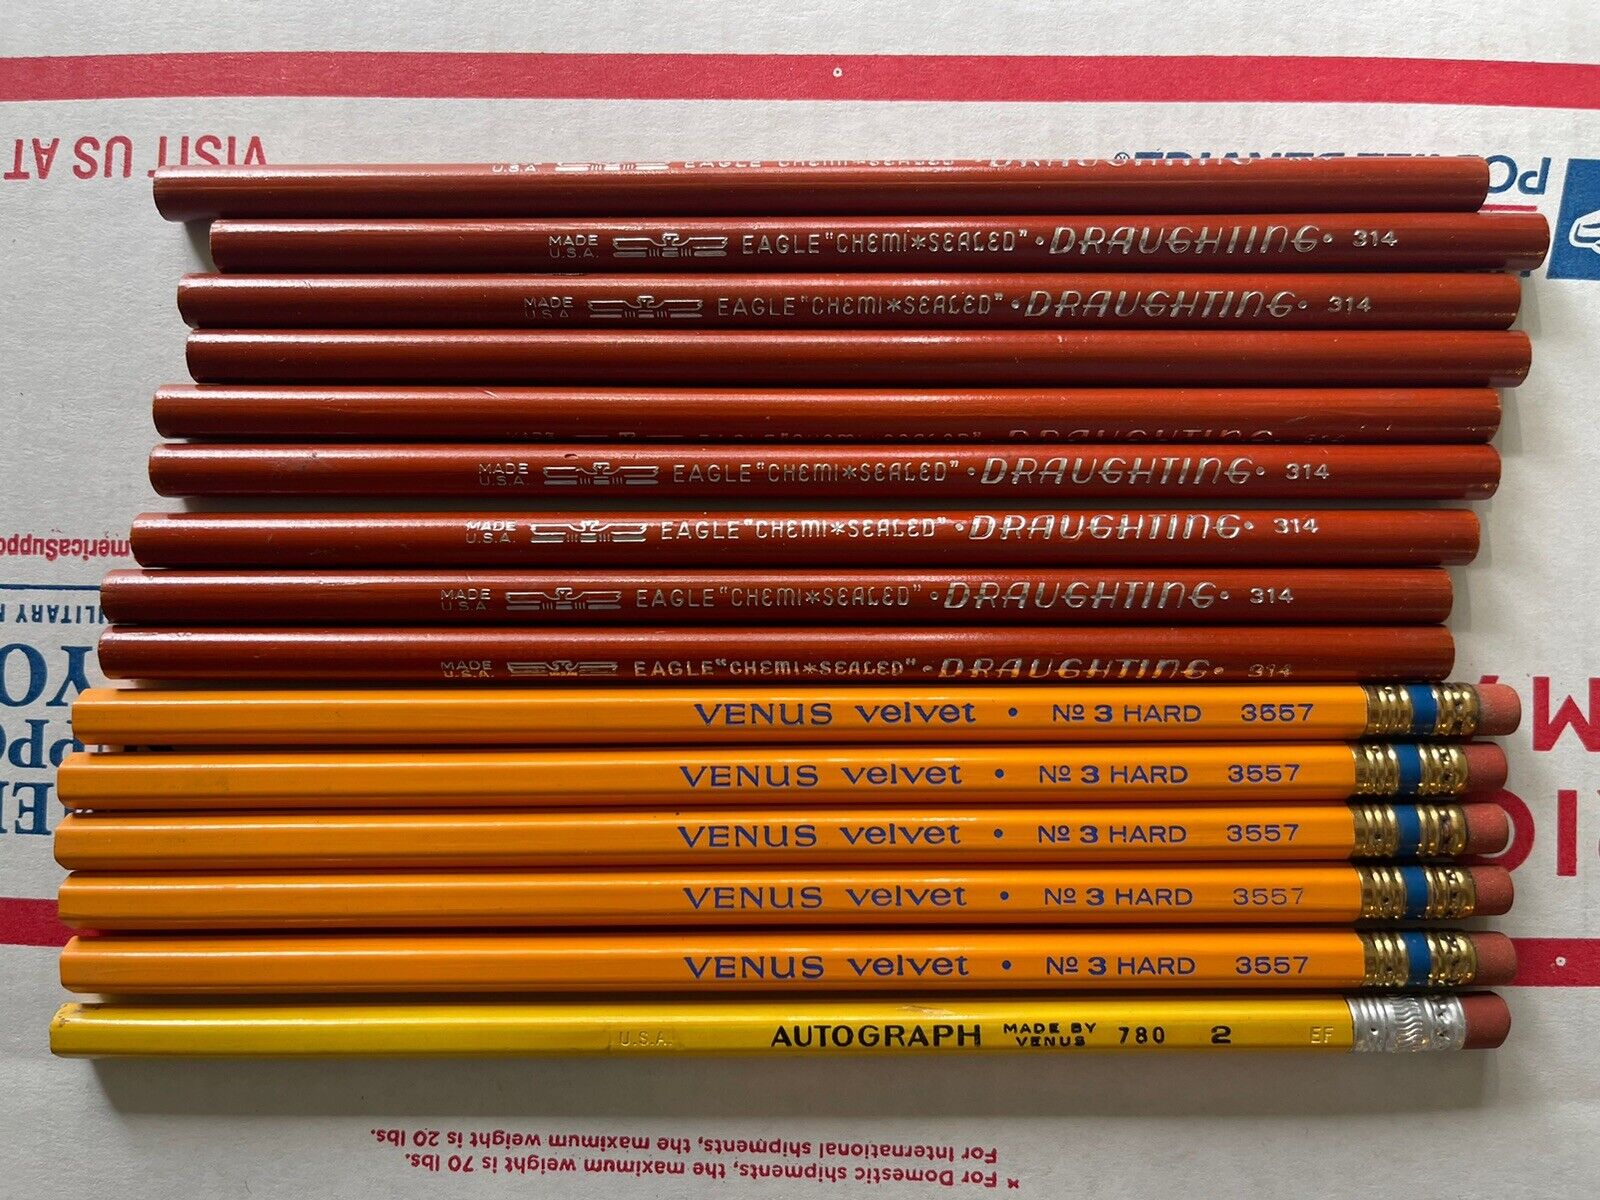 15 COUNT Chemi  Sealed Draughting 314 Untipped Pencils Eagle Venus Velvet